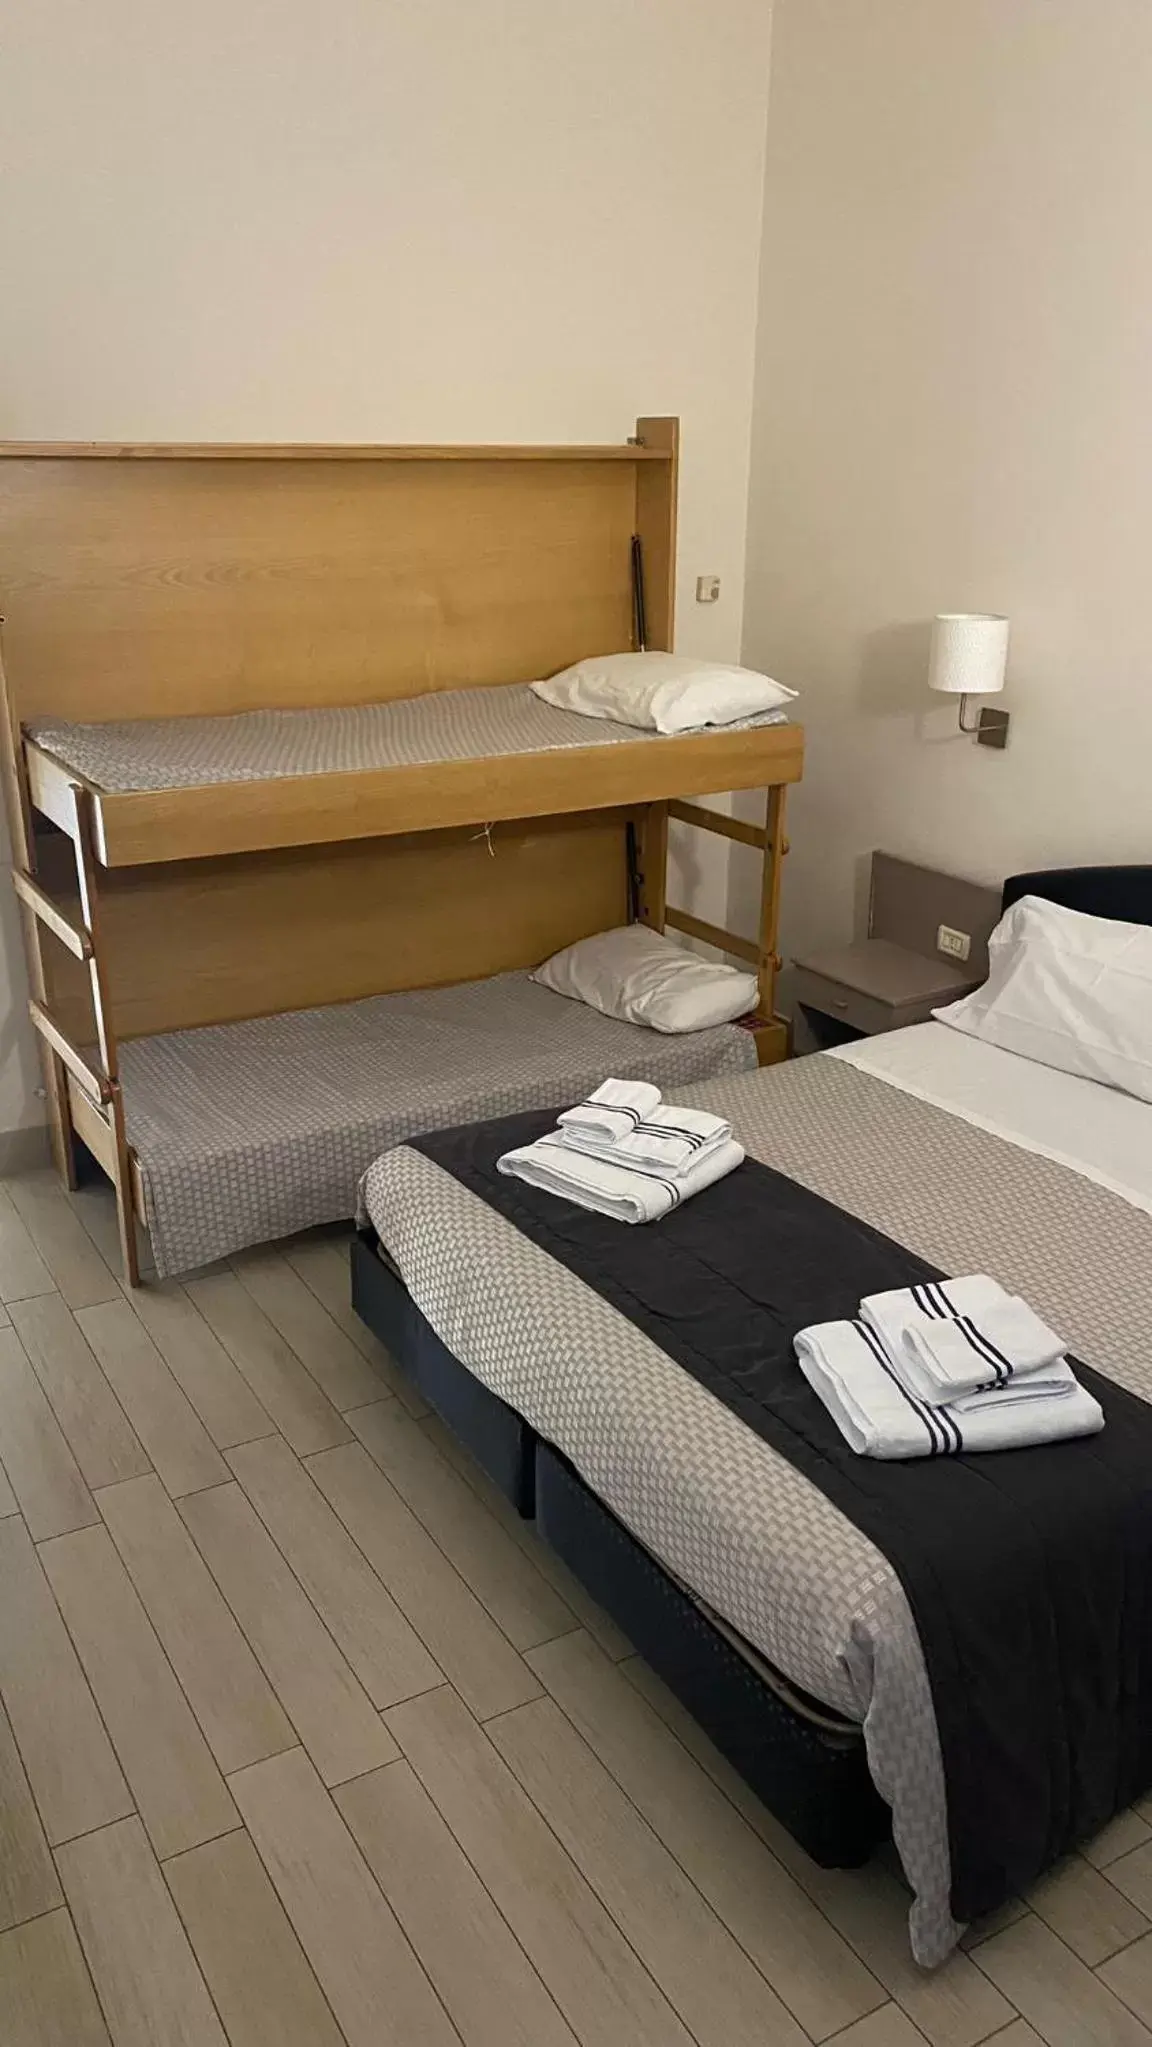 bunk bed in Hotel Fiorentina